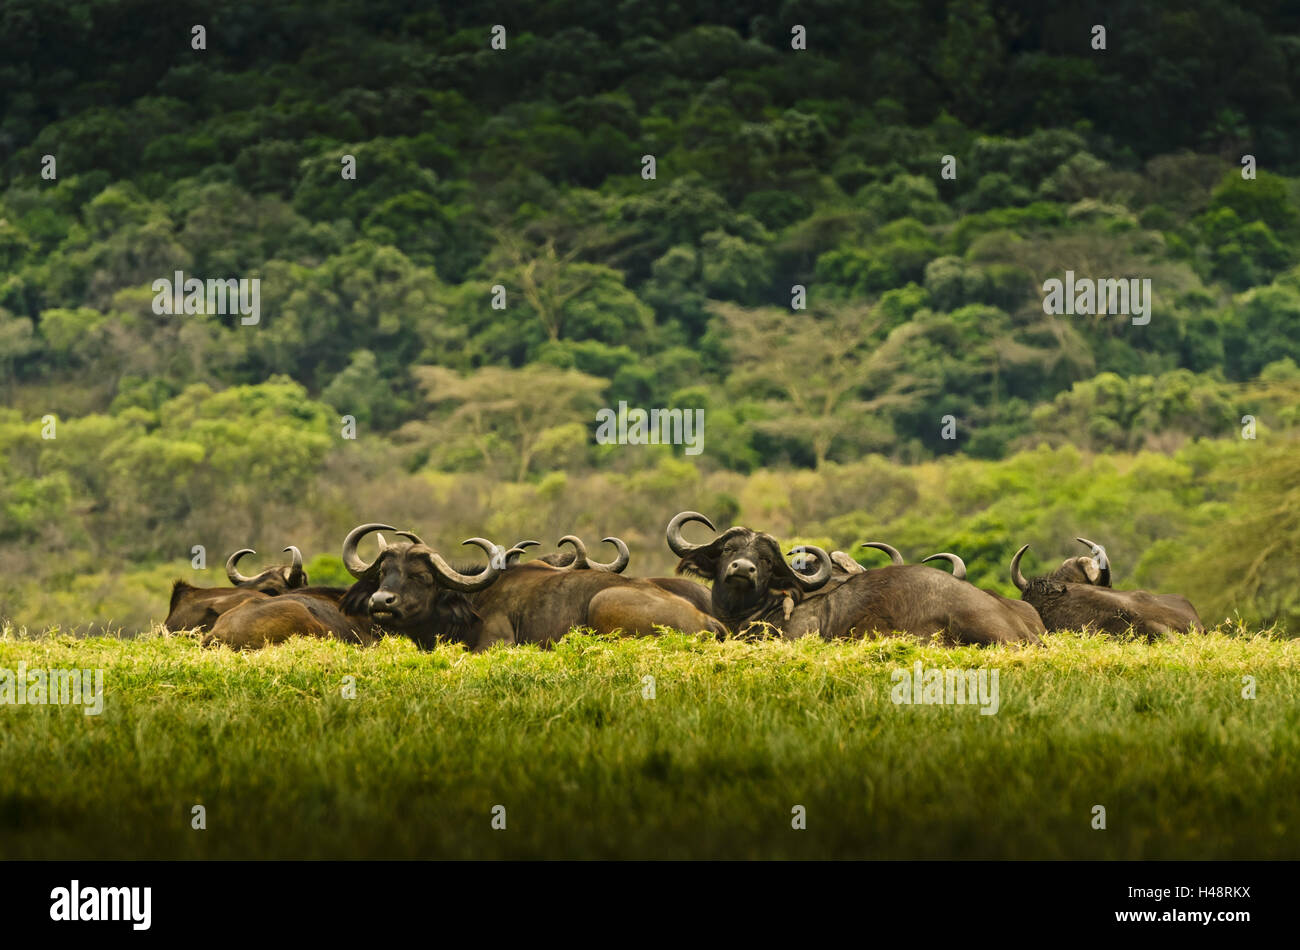 Africa, Tanzania, East Africa, Mt. Meru, Arusha National Park, buffaloes, Stock Photo